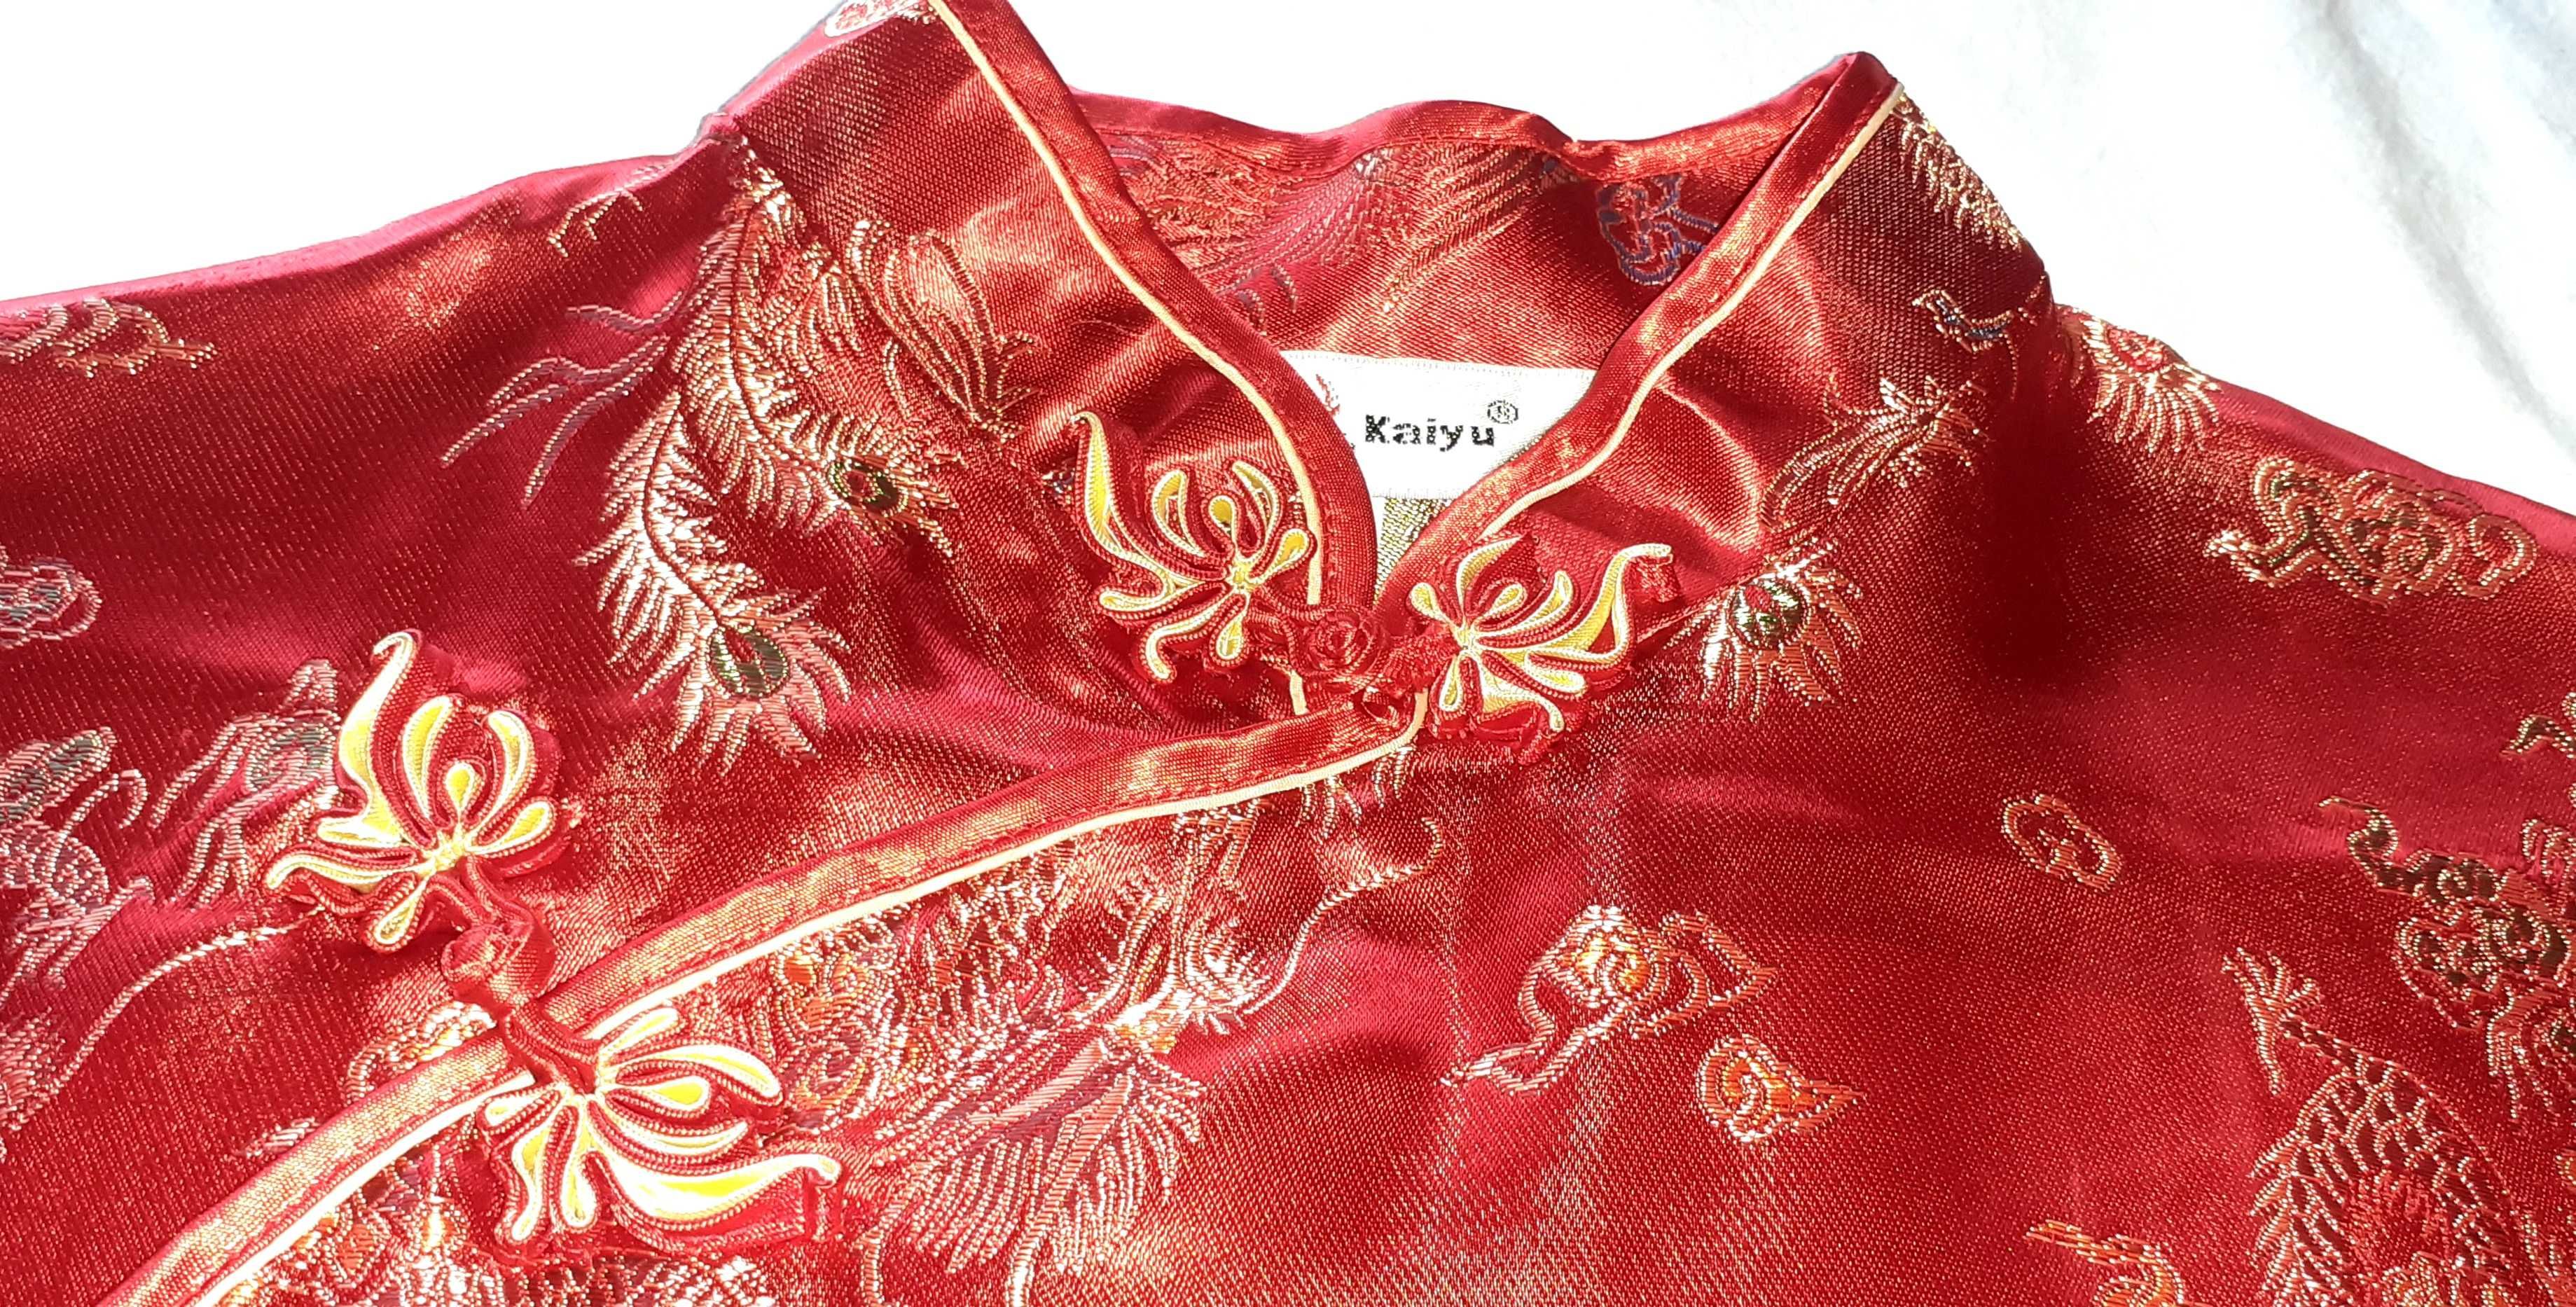 Vestido Tradicional Chinês